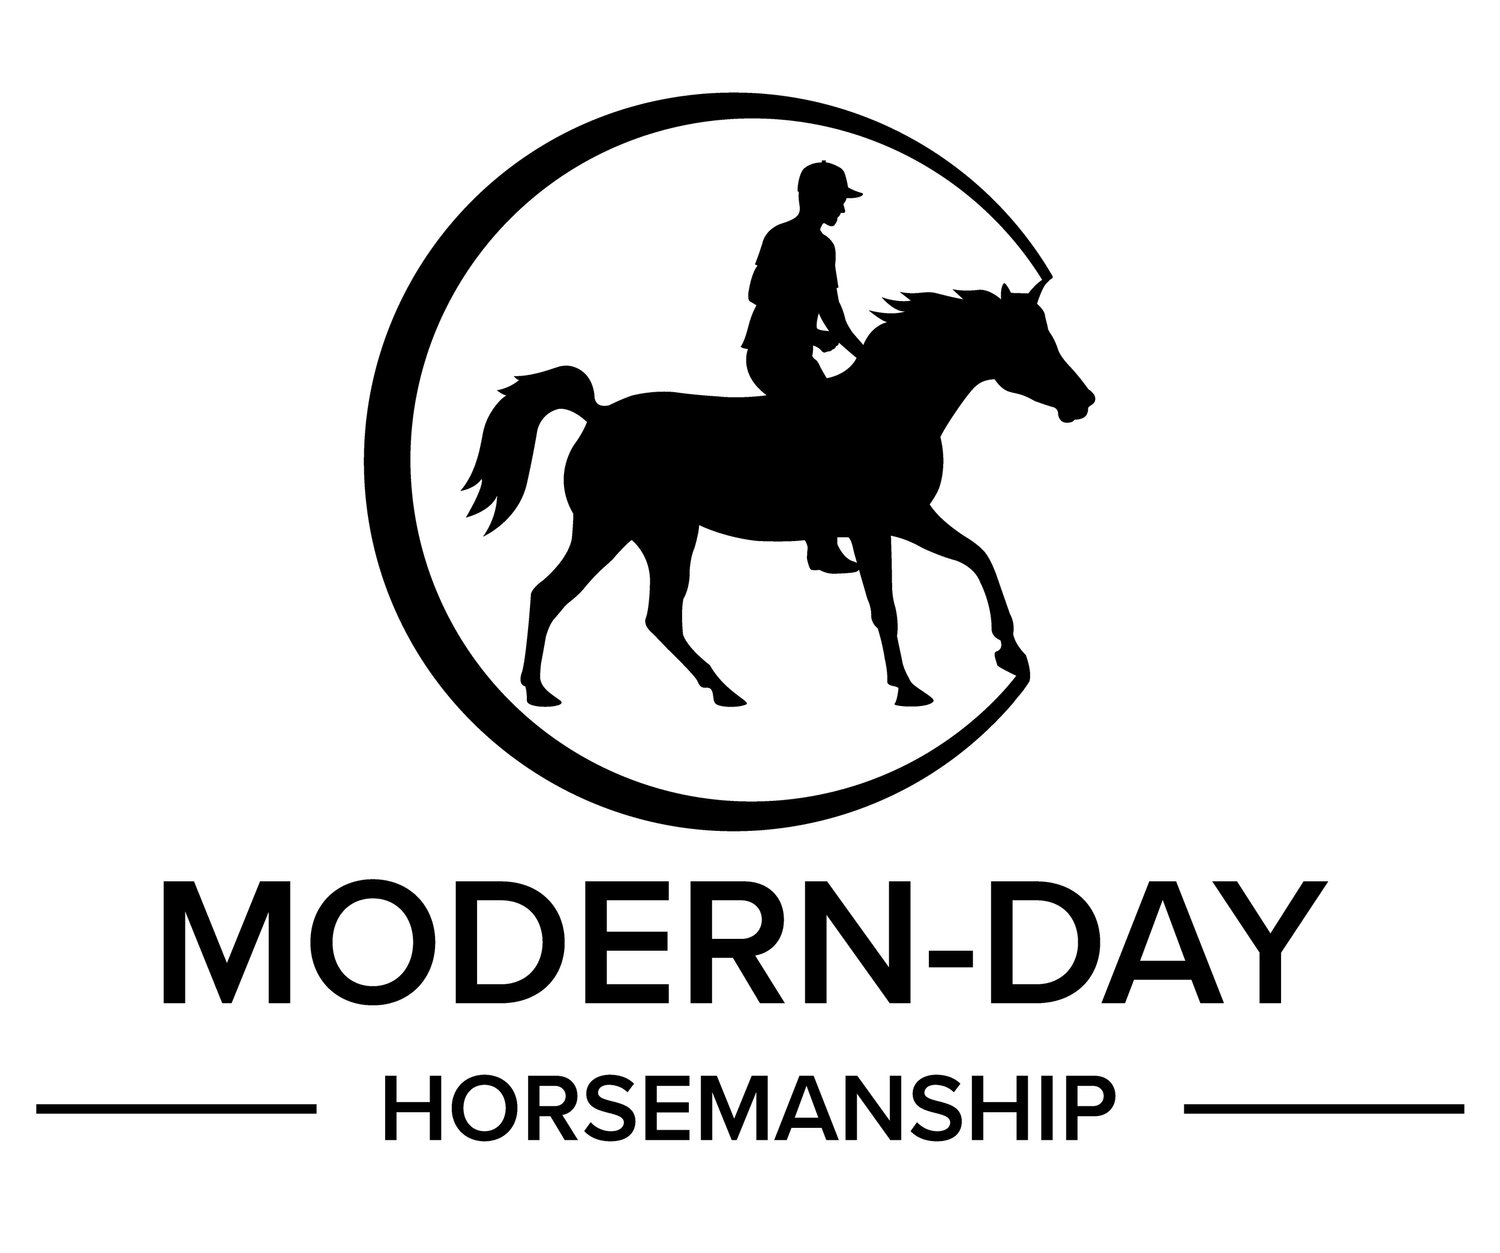 MODERNDAY HORSEMANSHIP